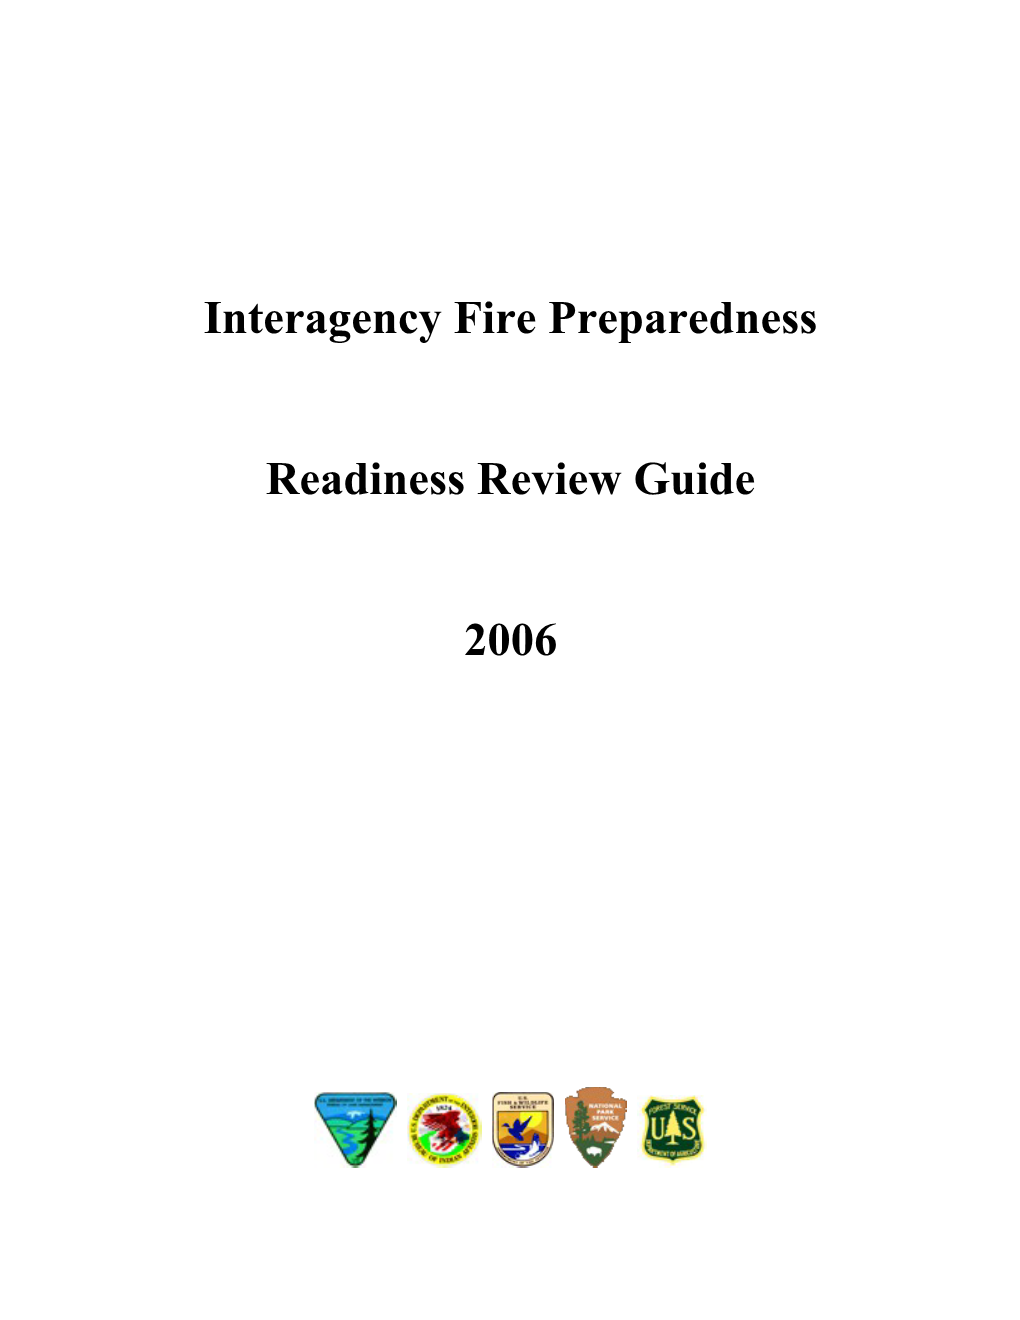 Interagency Fire Preparedness